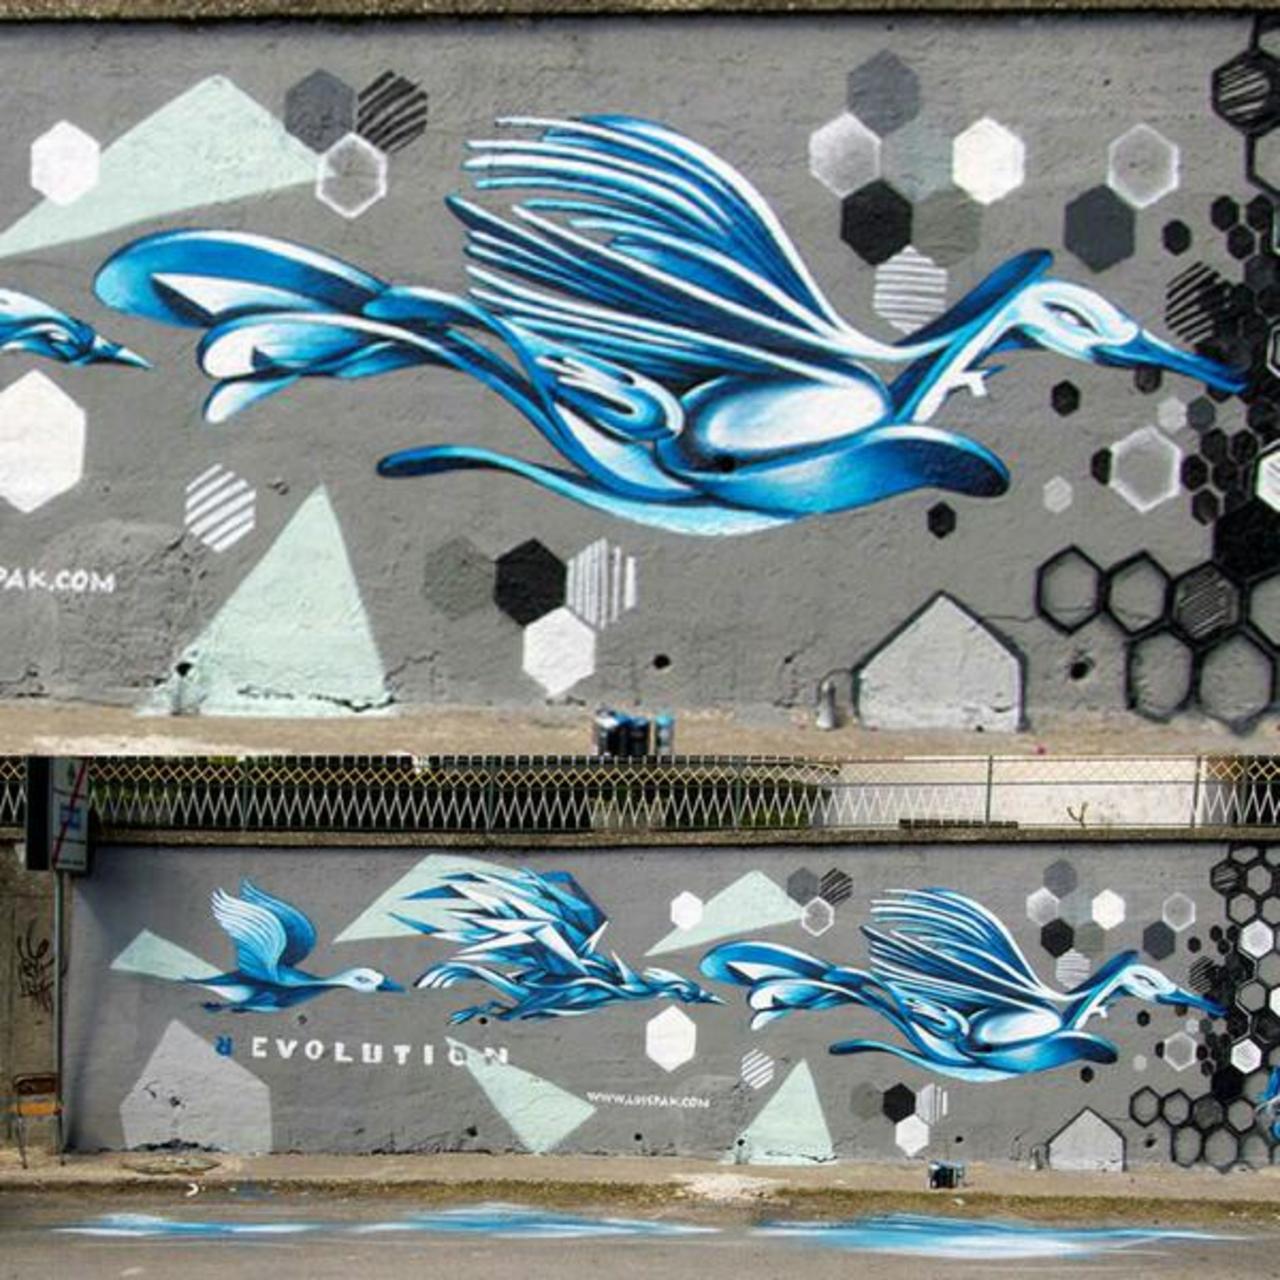 Vuela lejos.
Artista: LuisPak
Italia
#art #streetart #mural #graffiti http://t.co/i7wdrYCX9T